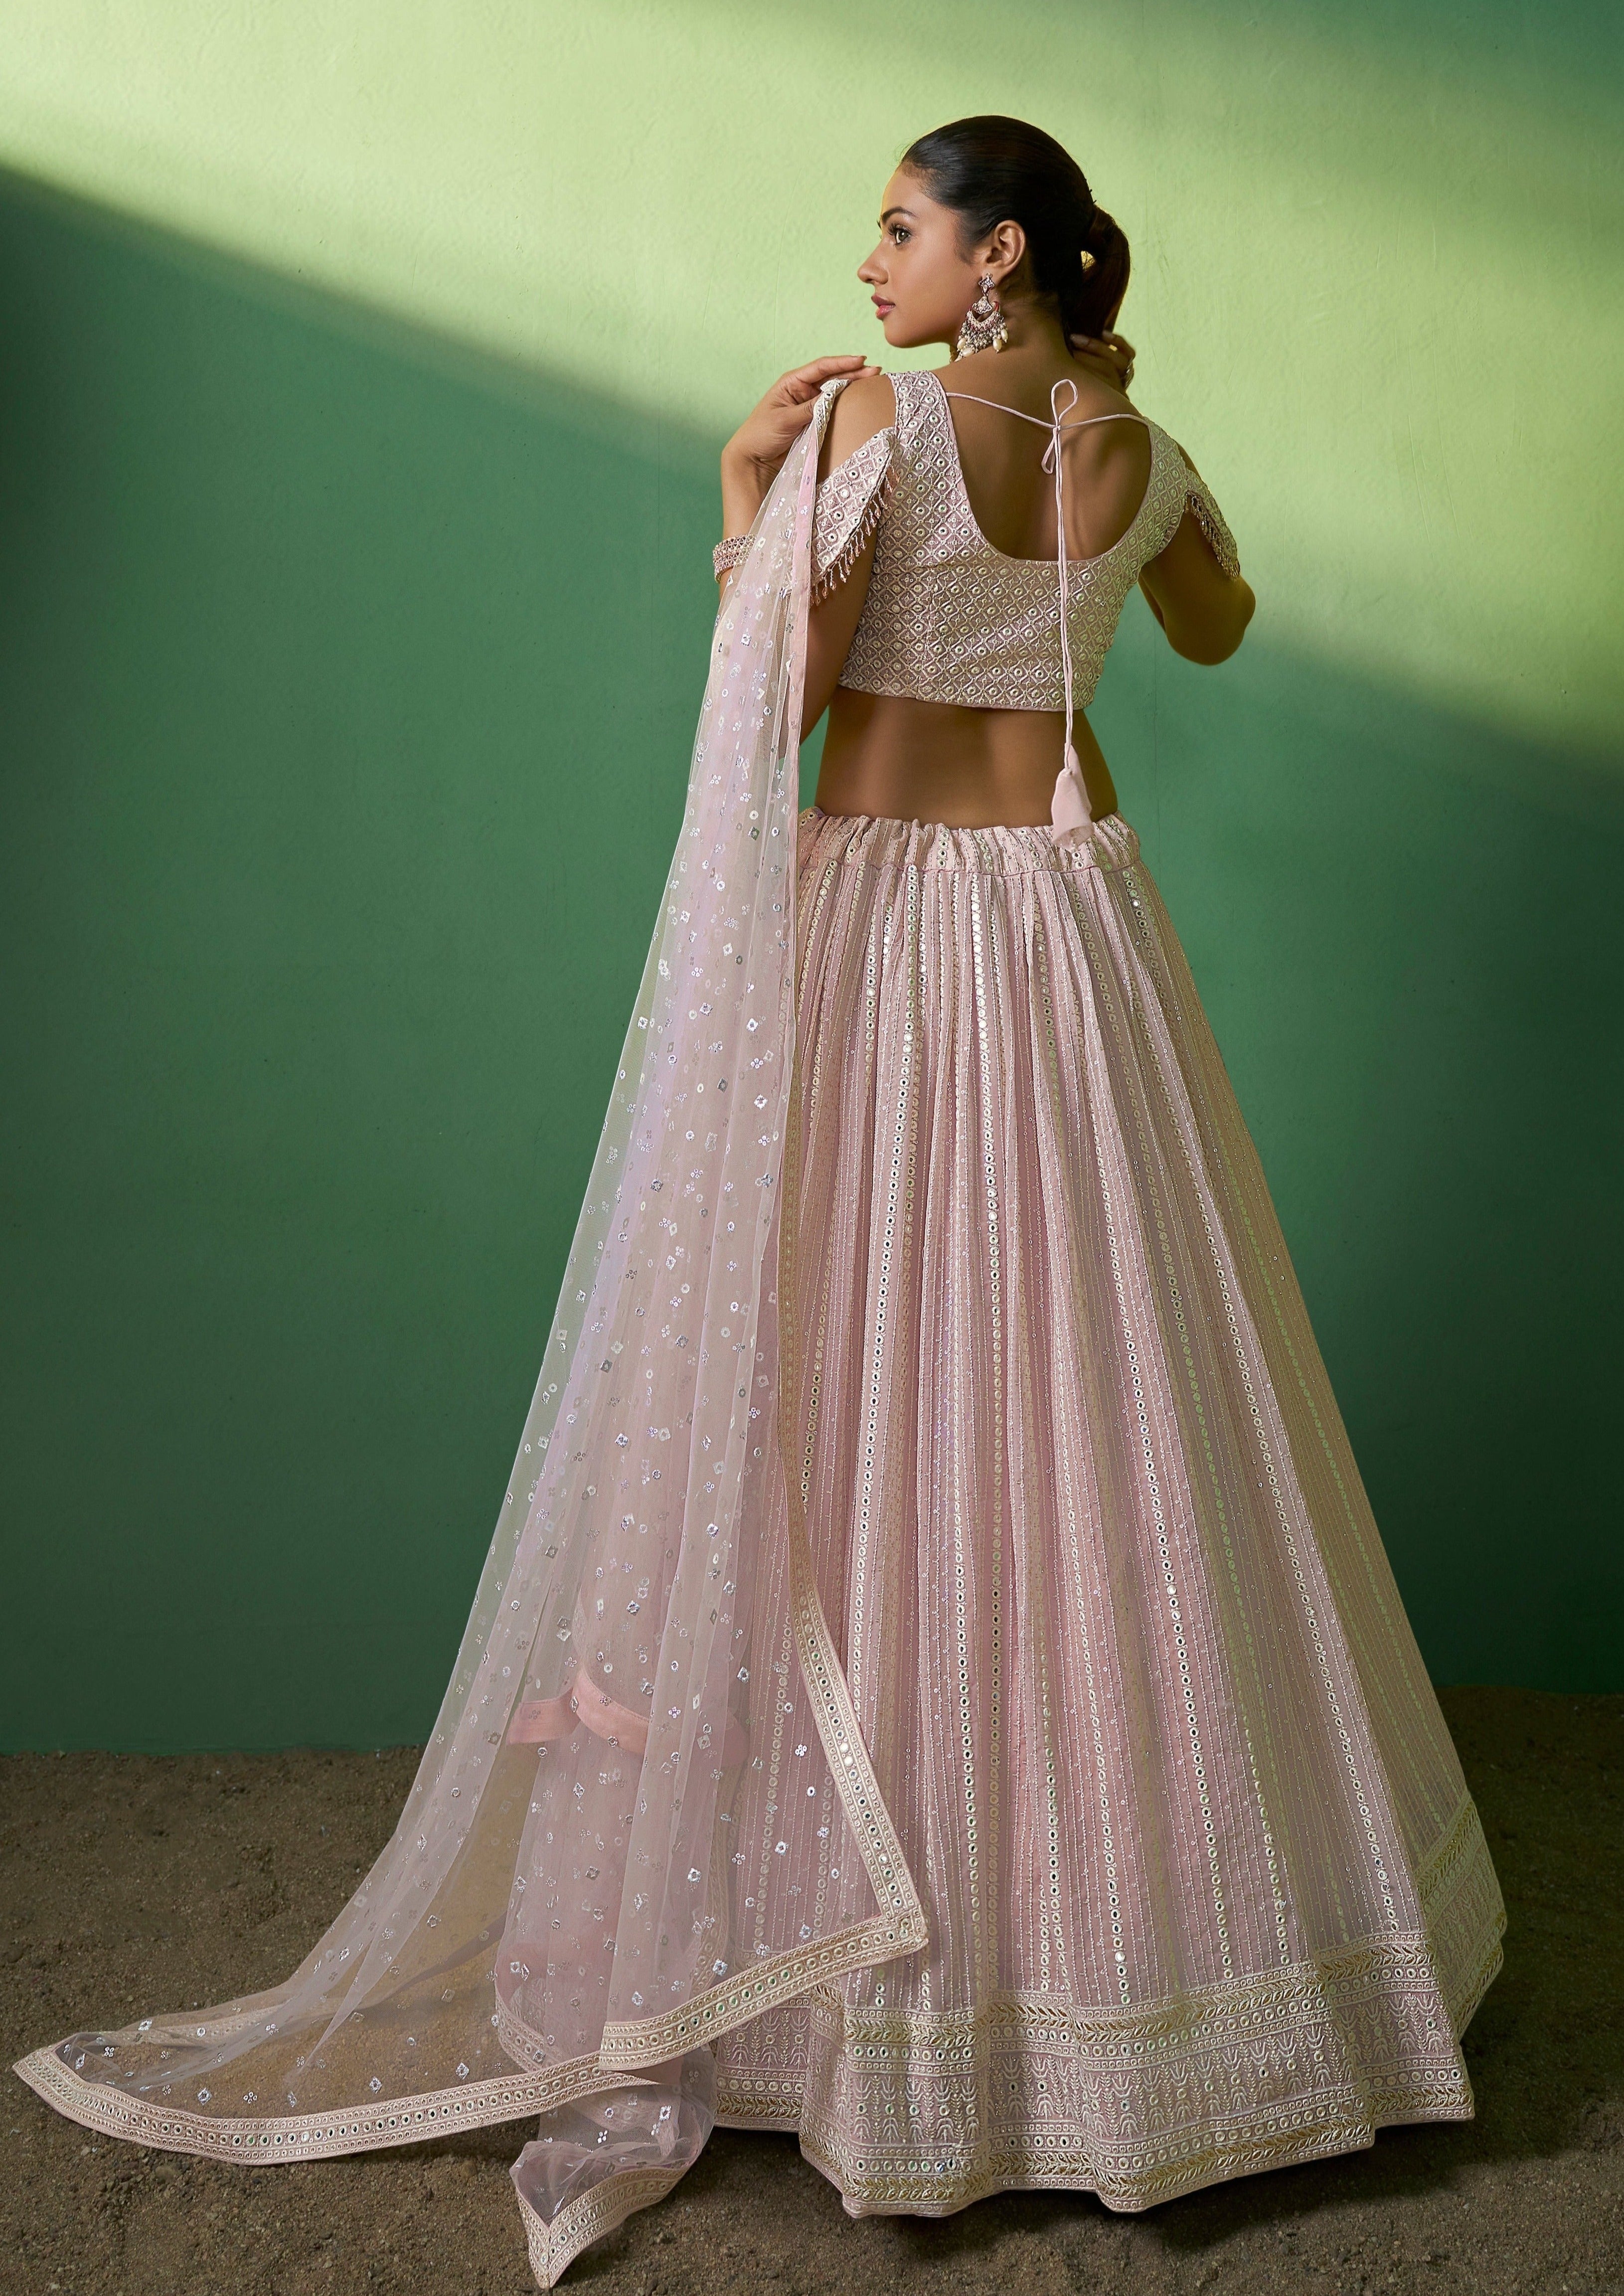 Bhumi Pednekar in floral Rahul Mishra lehenga and blingtastic blouse is a  beautiful bridesmaid. Pics - India Today